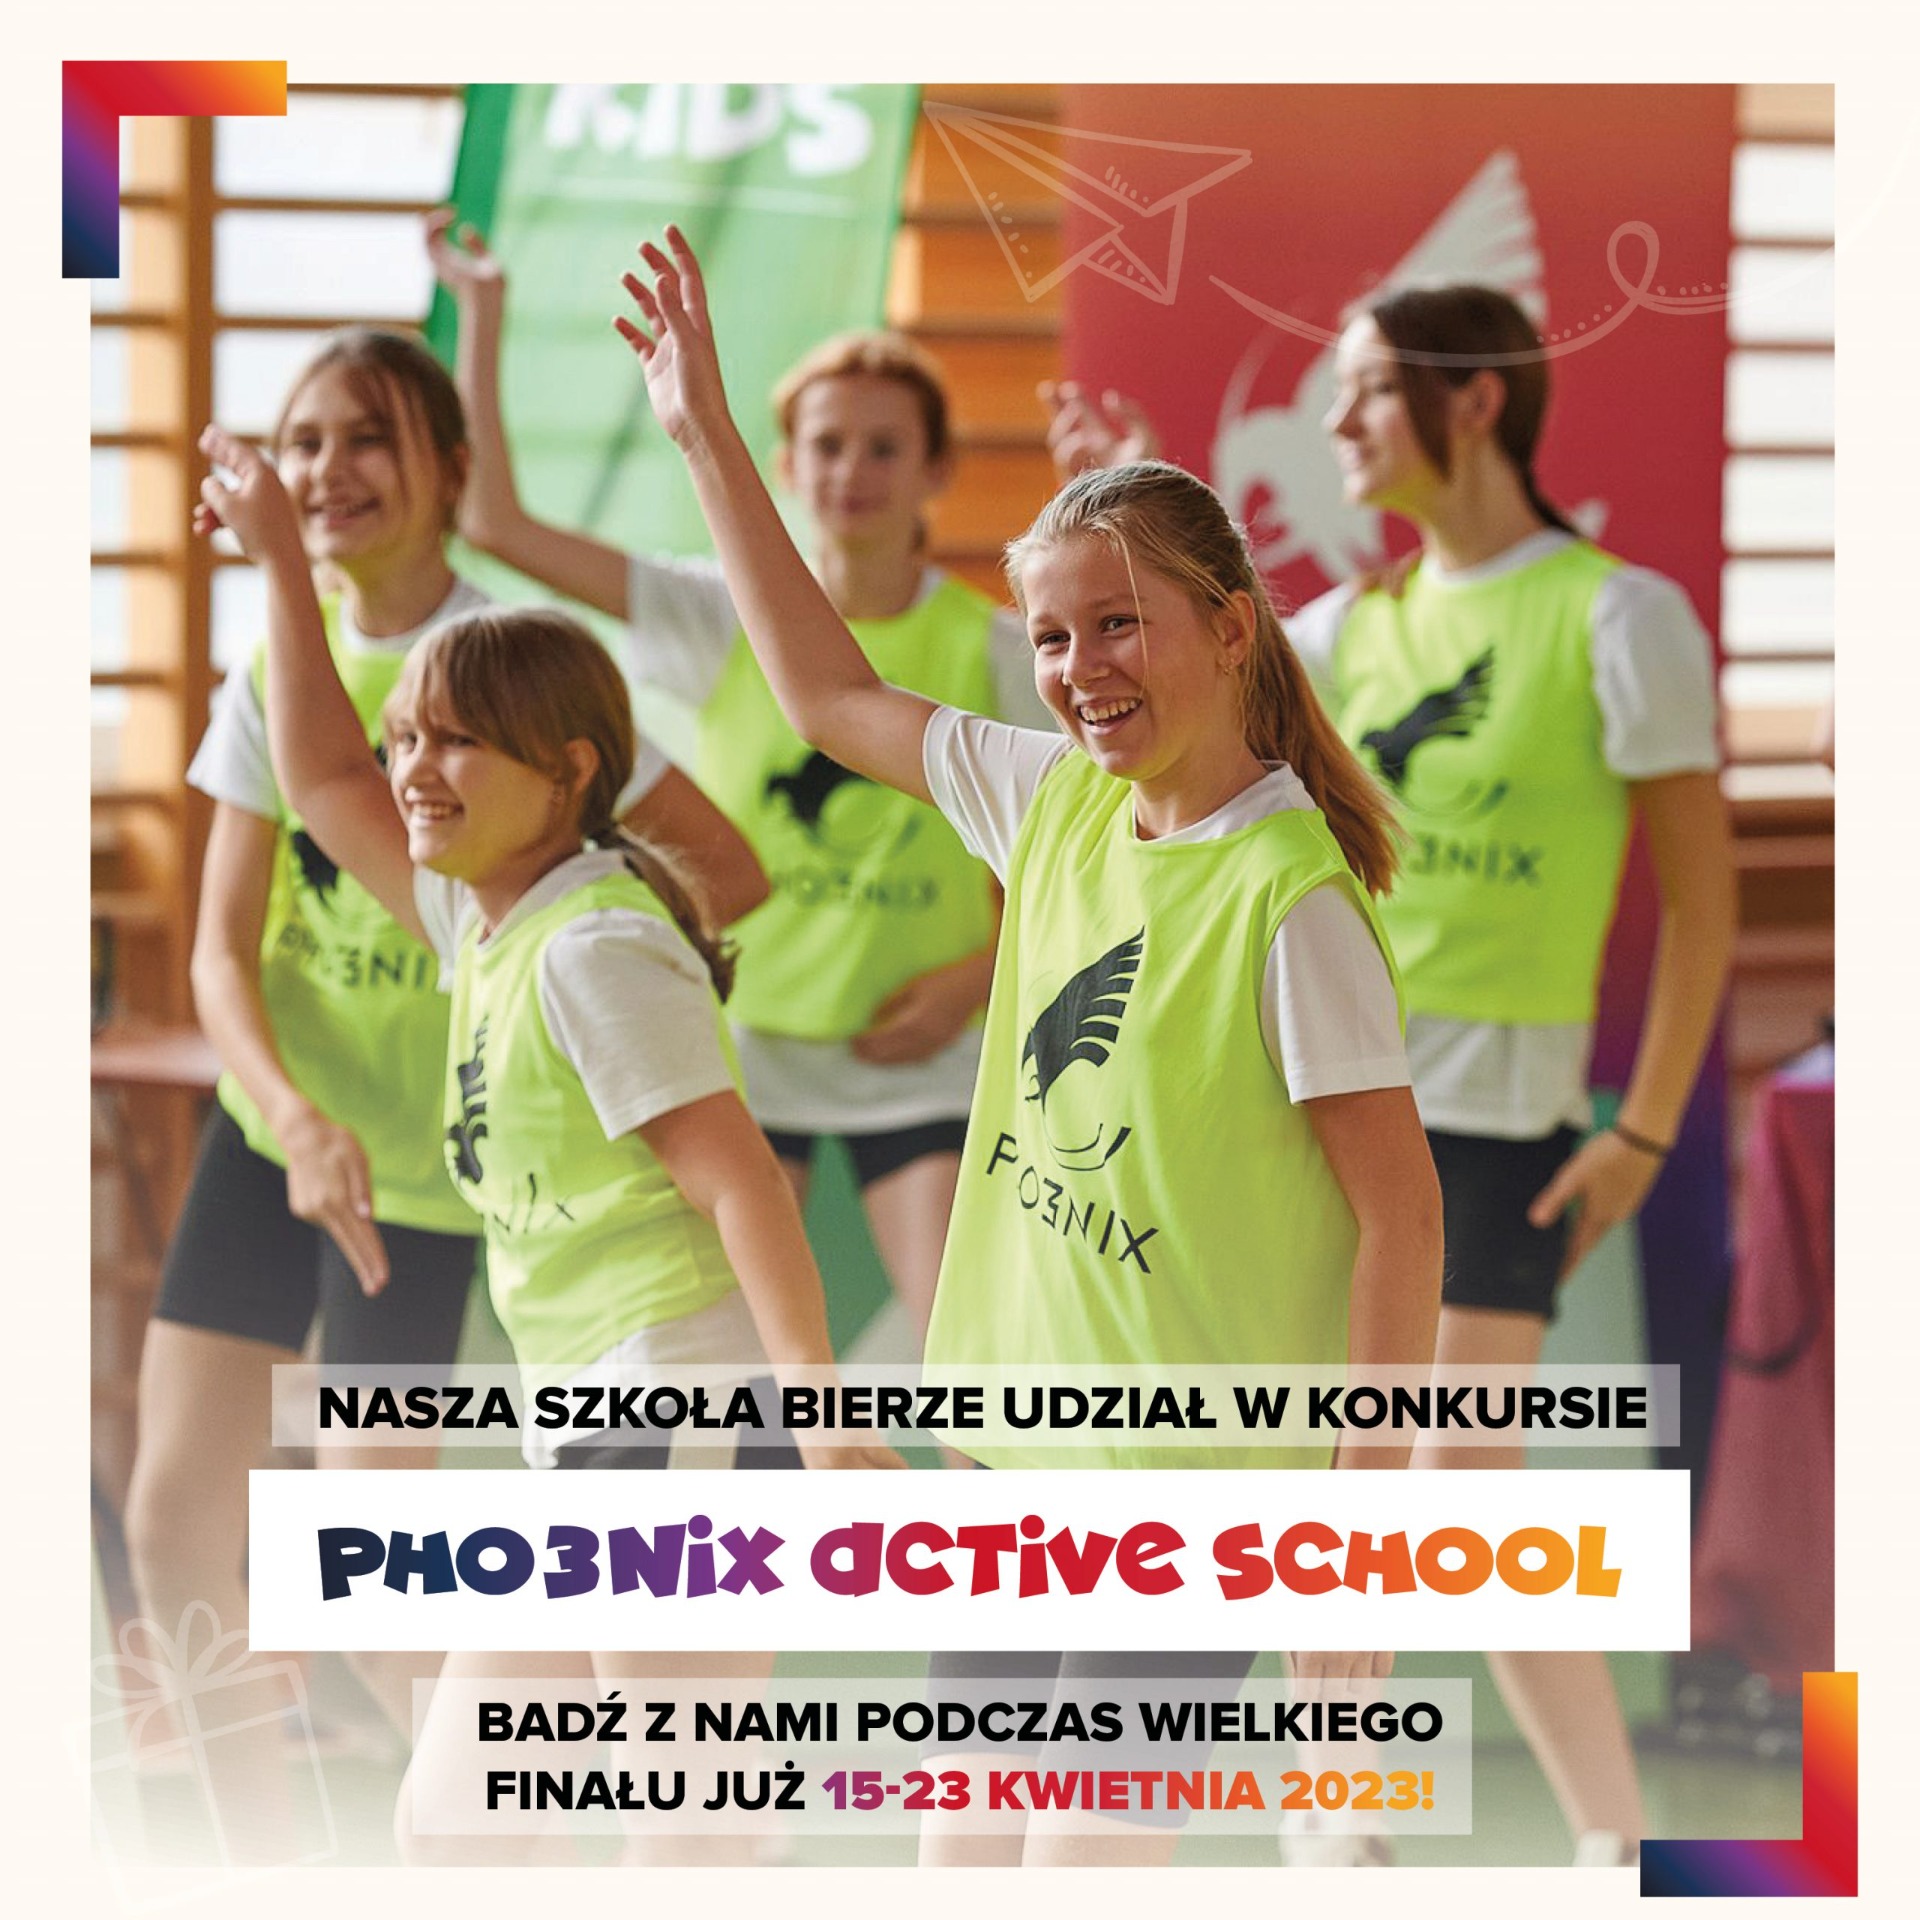 Pho3nix active school - Obrazek 1